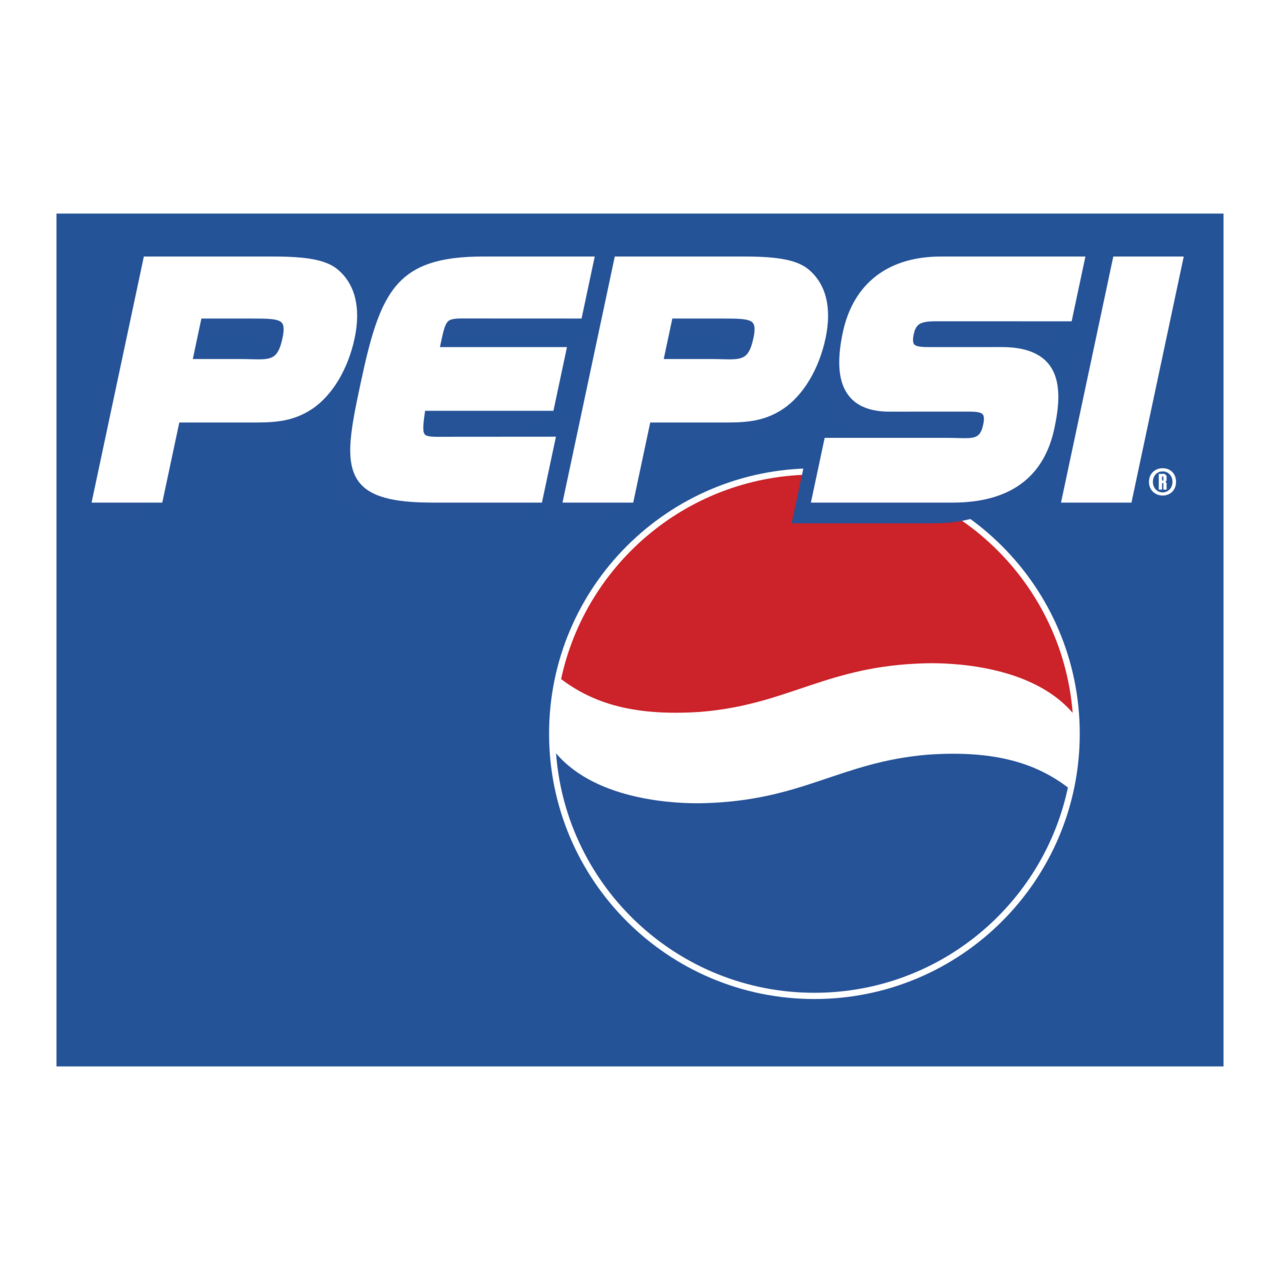 Pepsi Logo PNG HD Image